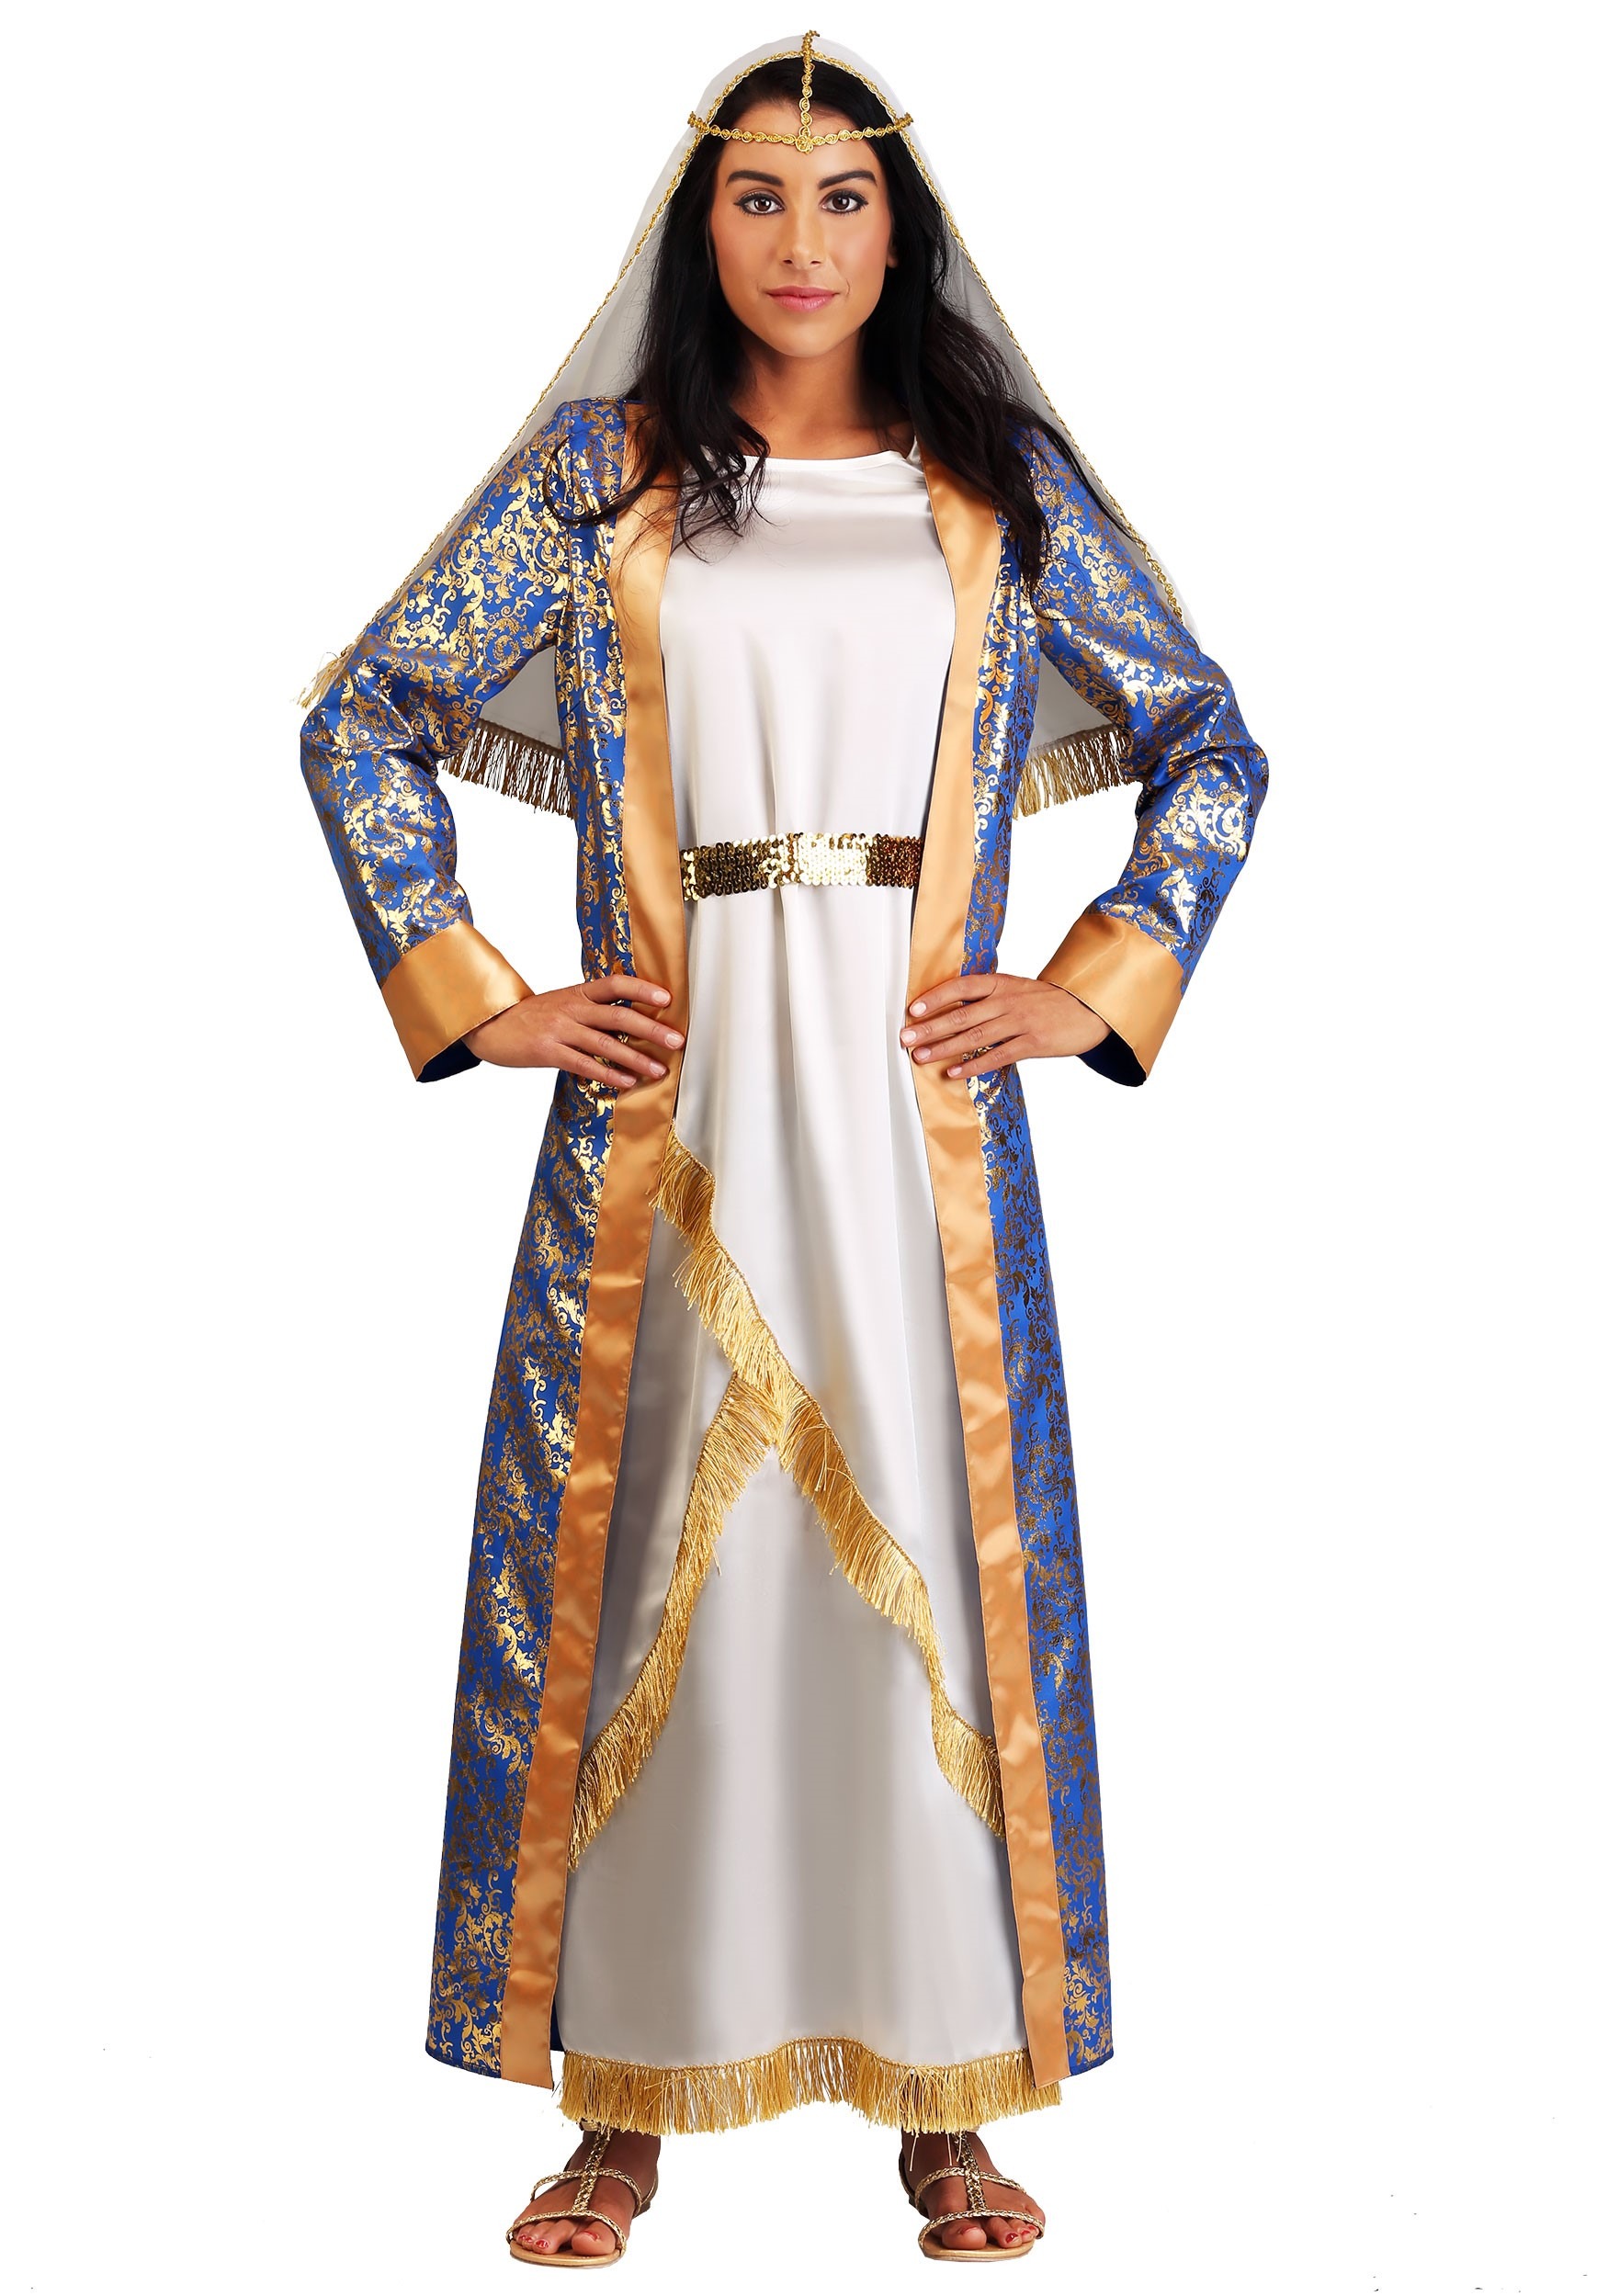 Photos - Fancy Dress FUN Costumes Plus Size Queen Esther Costume for Women Blue/Orange/